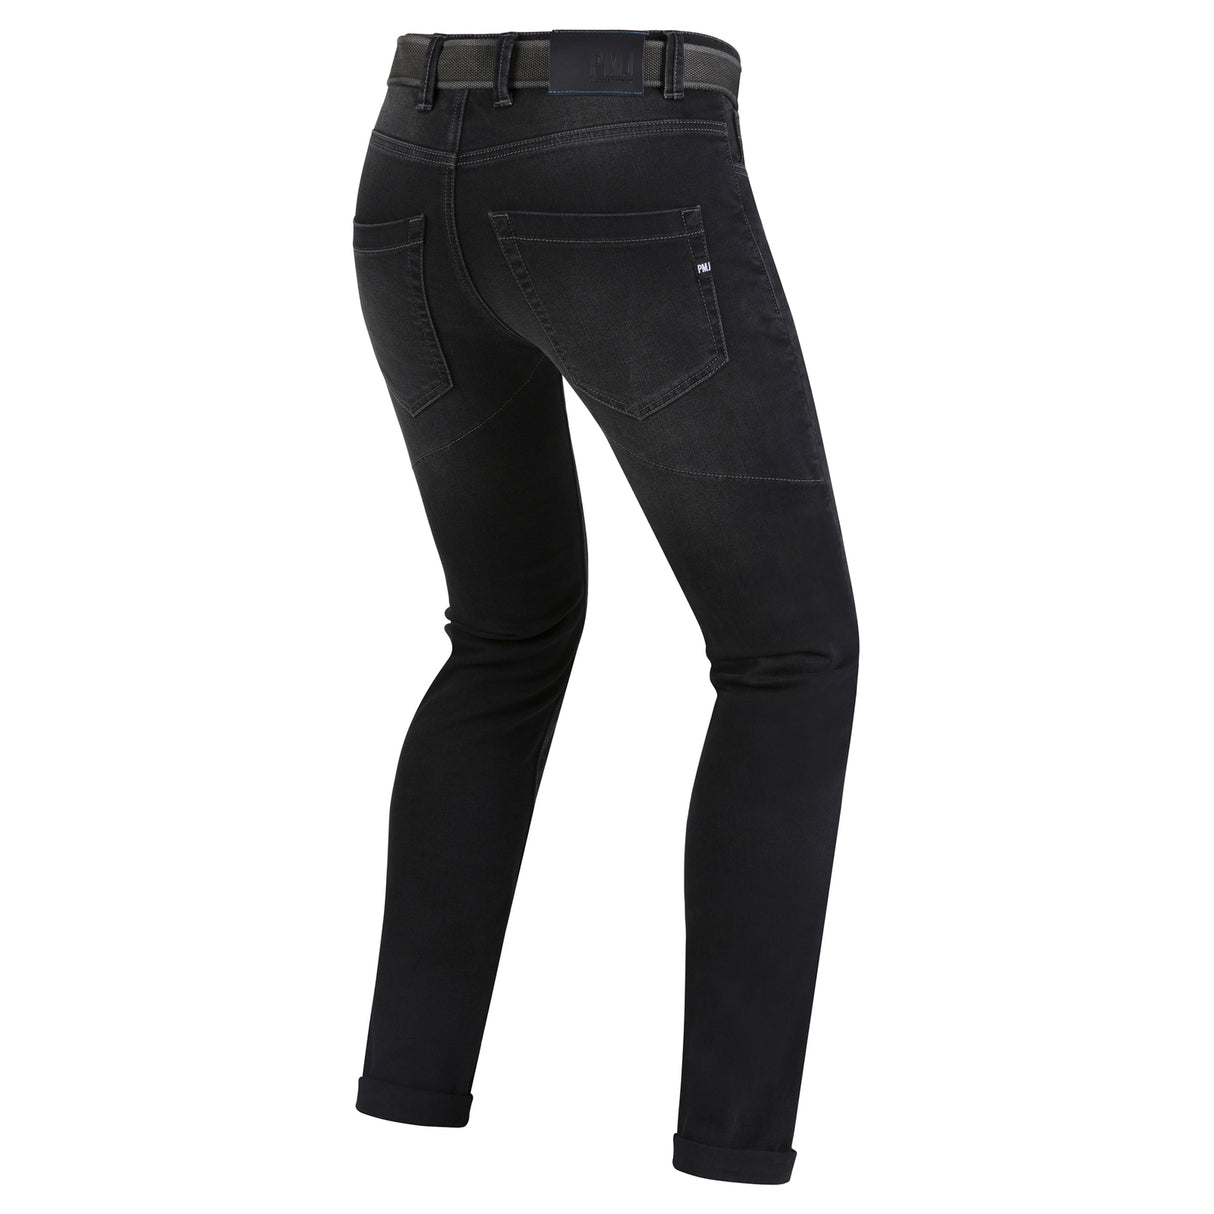 PMJ Caferacer Jeans (With Belt) - Black